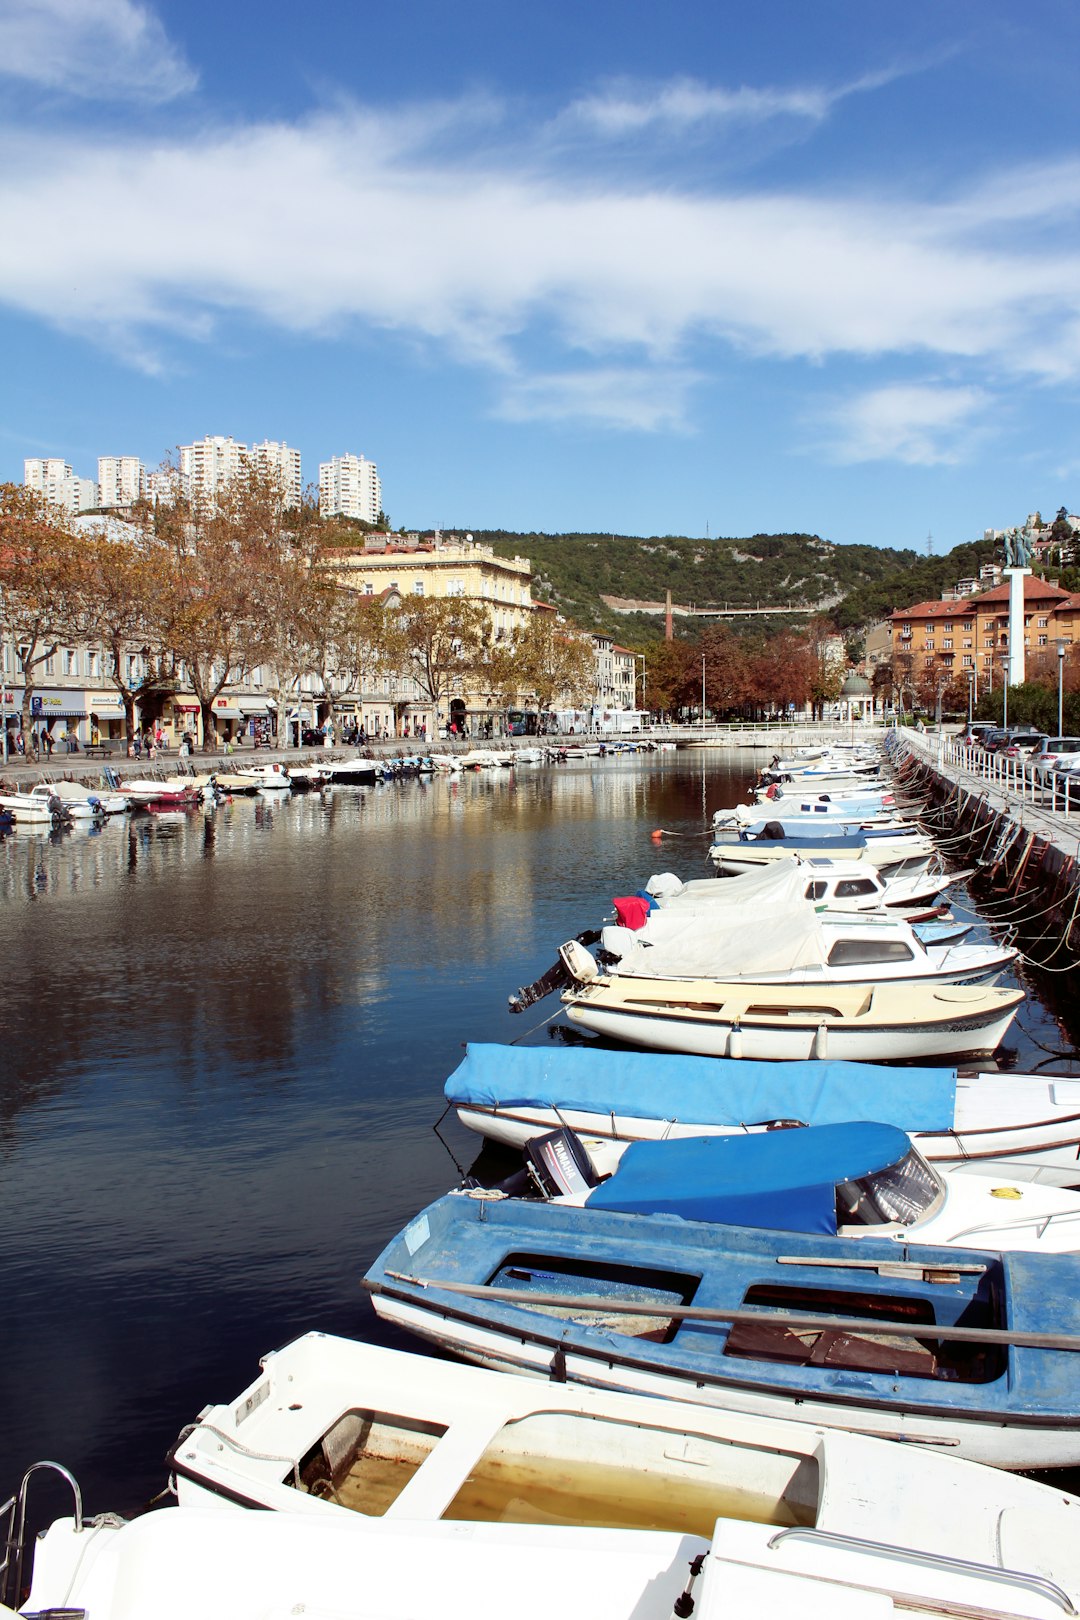 Travel Tips and Stories of Rijeka in Croatia